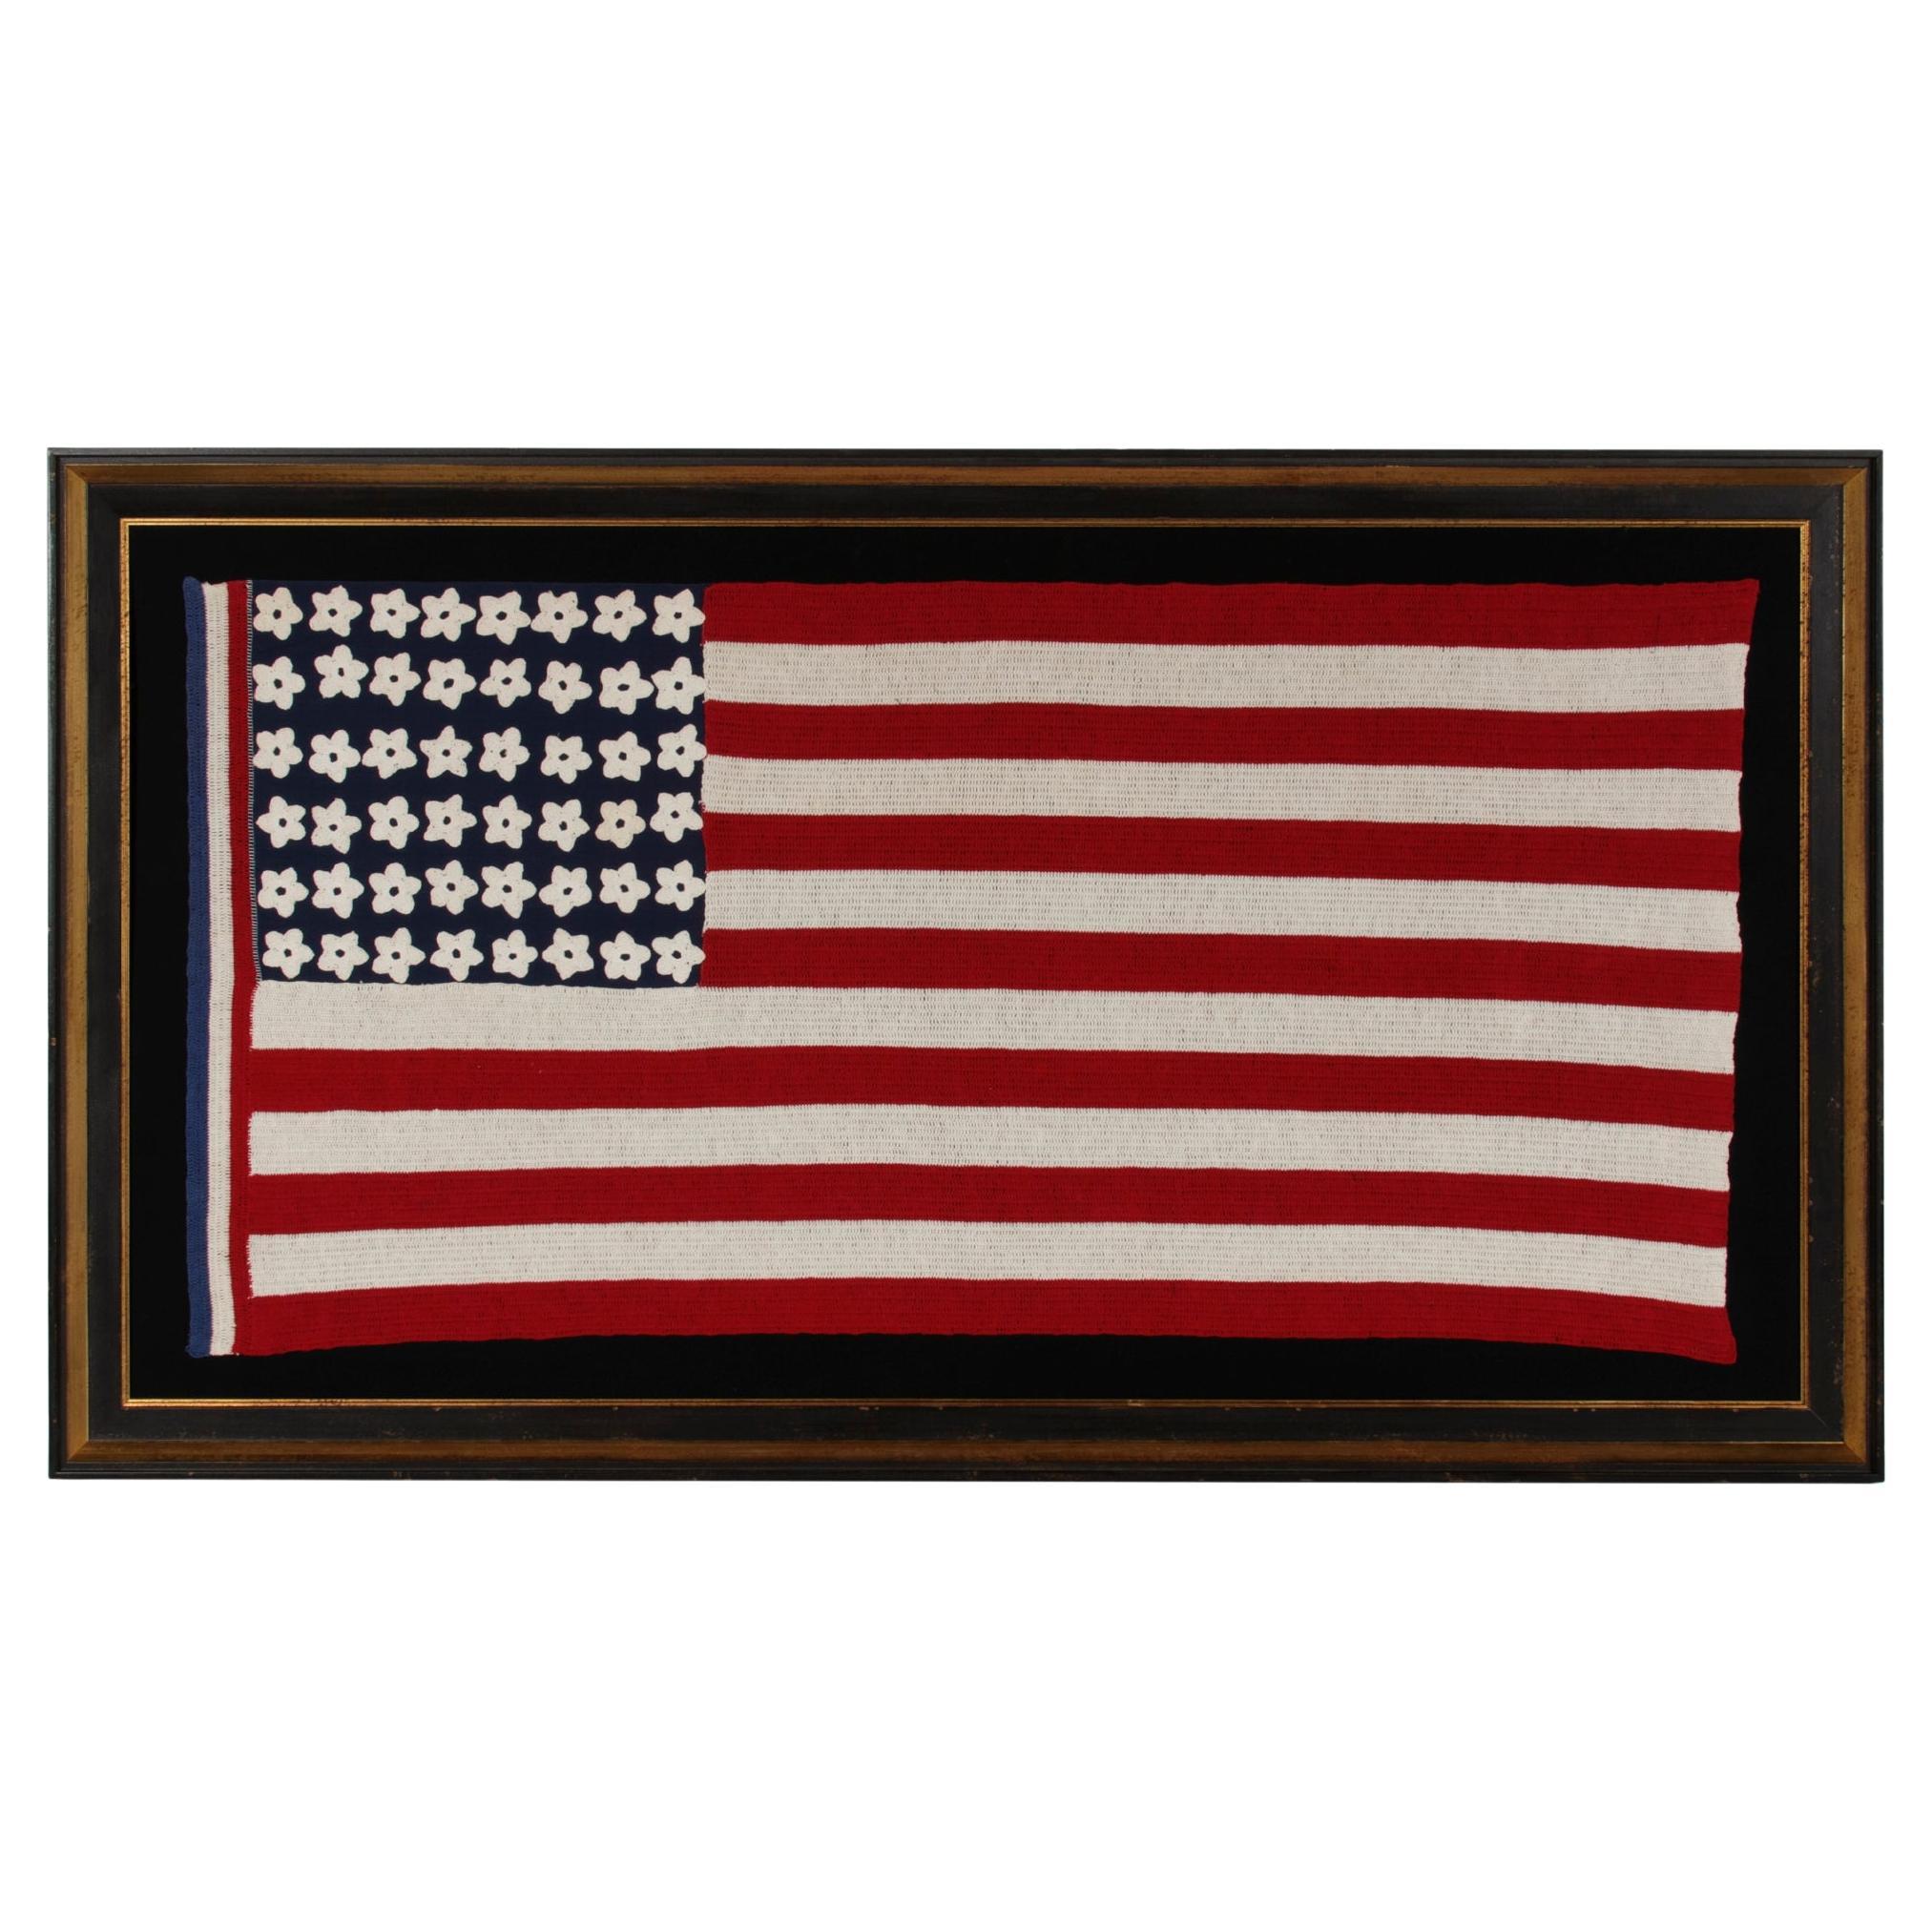 48 Star Crocheted Homemade American Flag, WWII Era, 1941-1945